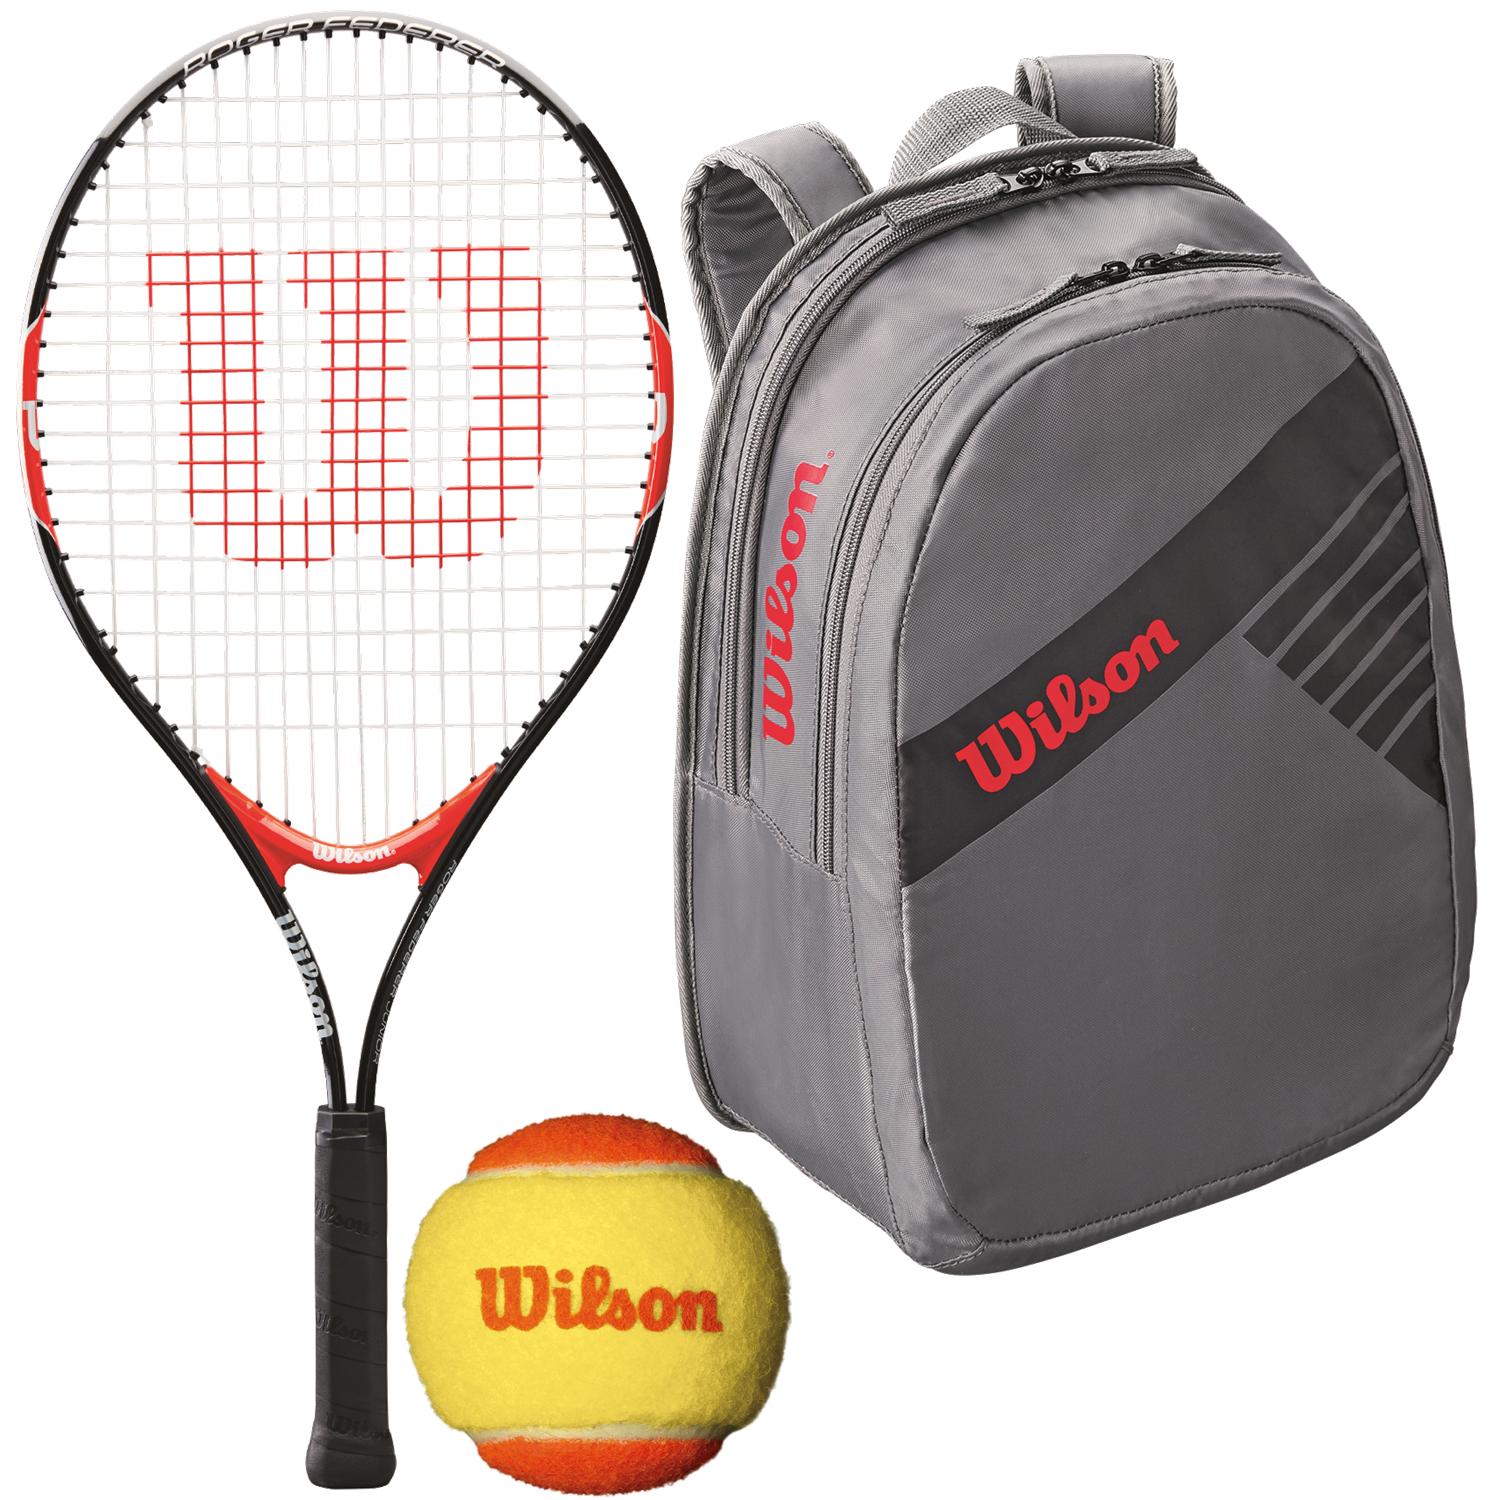 Wilson Roger Federer Junior Tennis Racquet, bundled with a Grey Junior Tennis Backpack and a 3-Pack of Orange Starter Tennis Balls